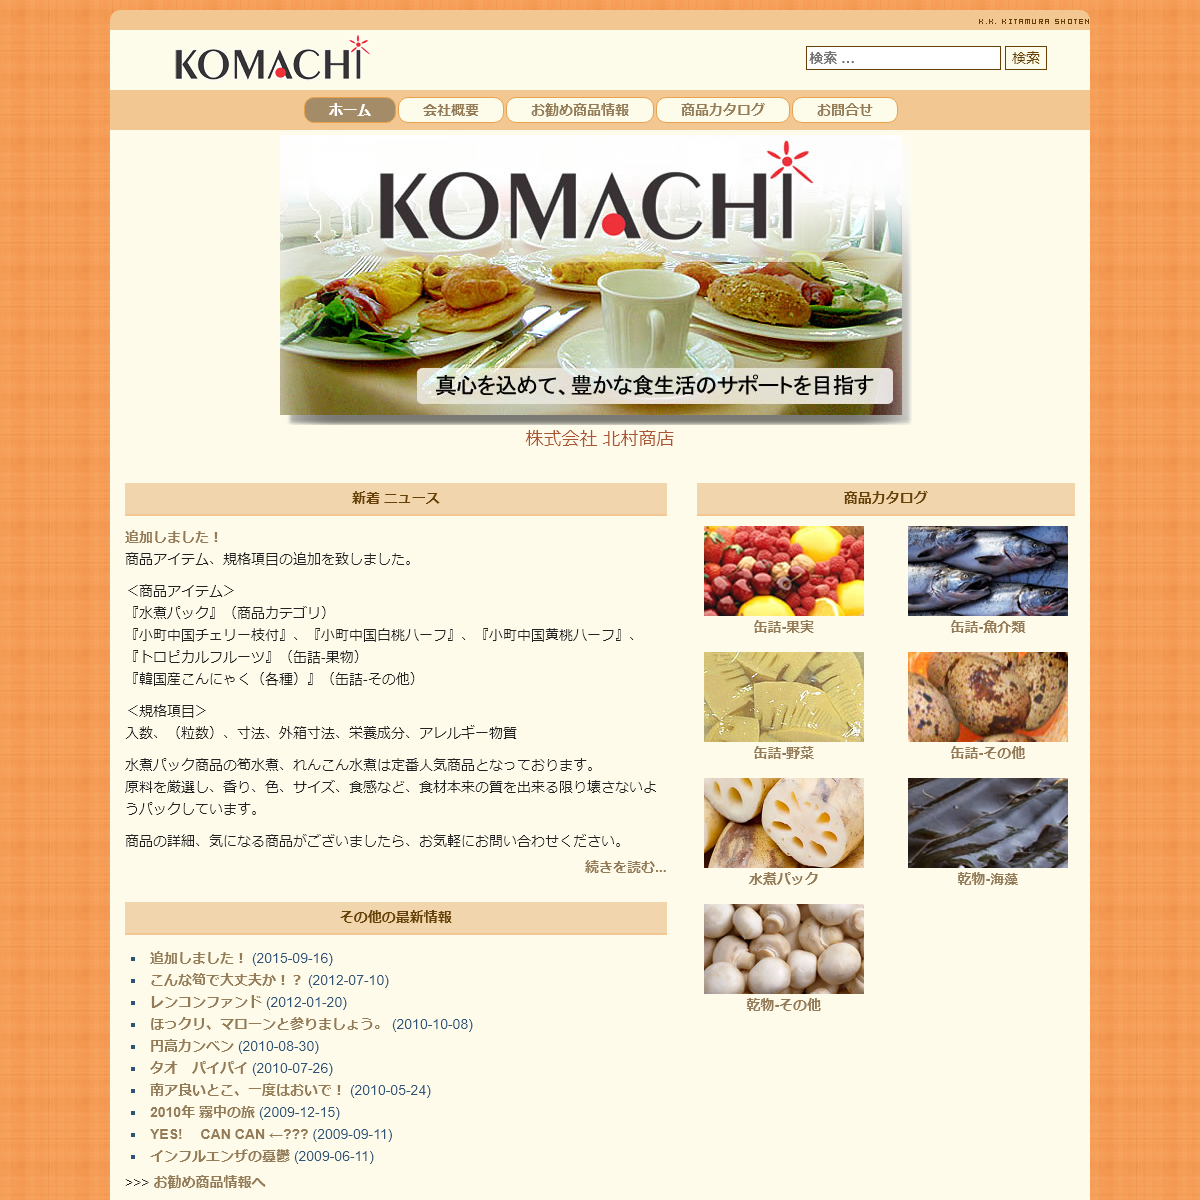 A complete backup of k-komachi.co.jp